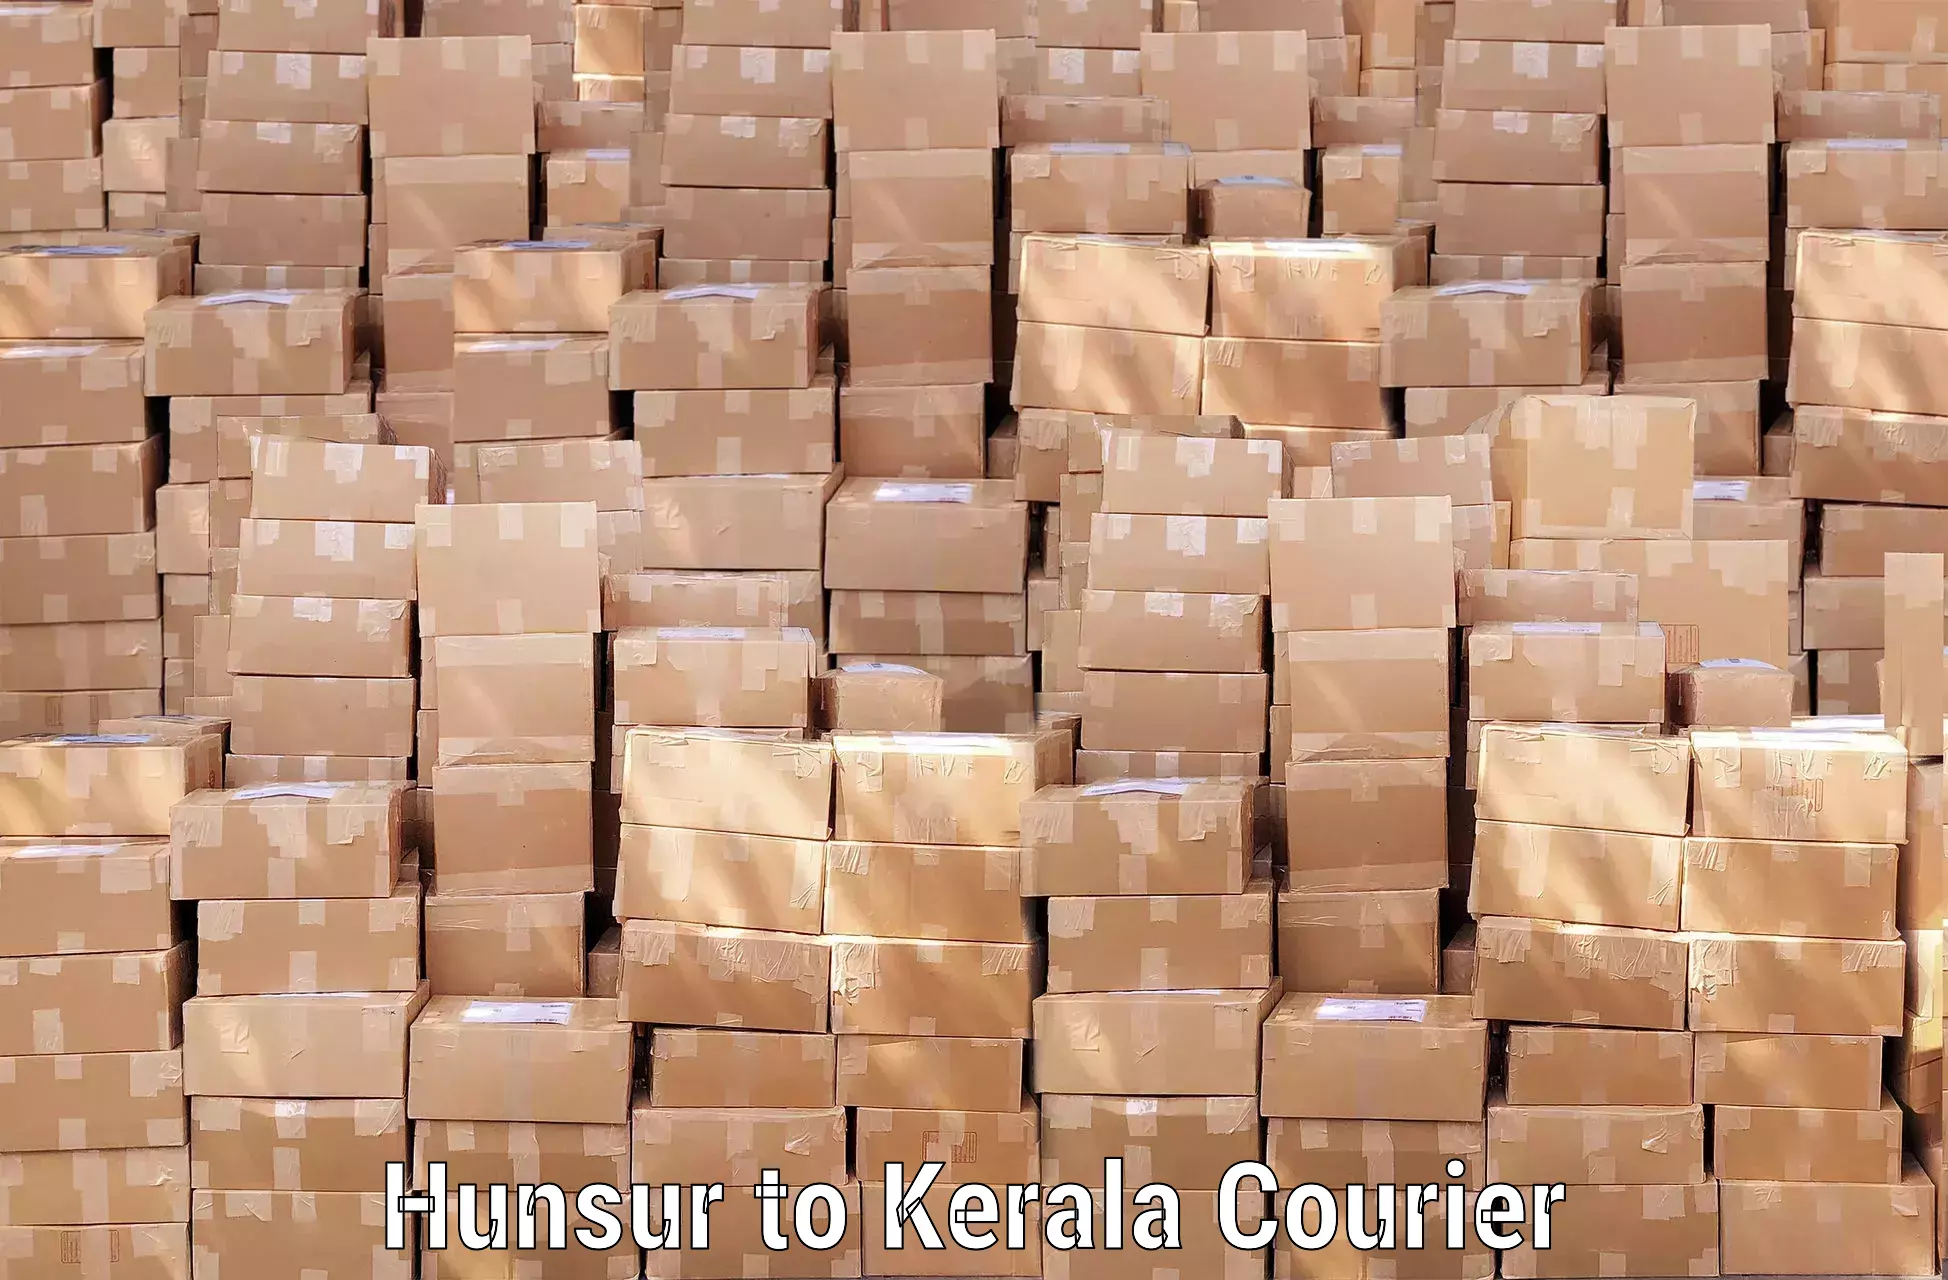 Doorstep luggage collection Hunsur to Kerala